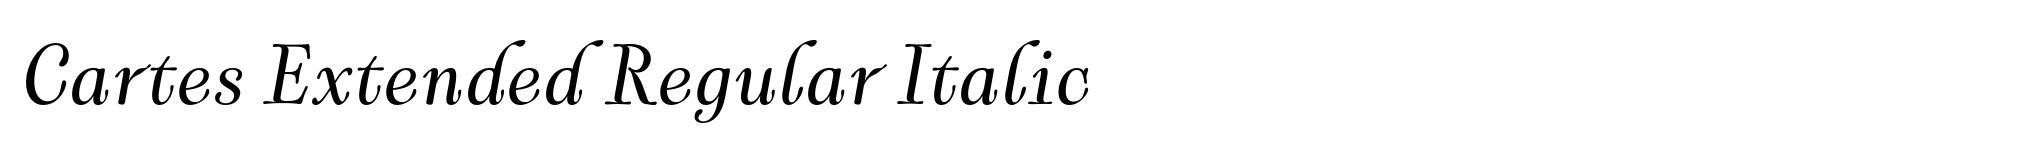 Cartes Extended Regular Italic image